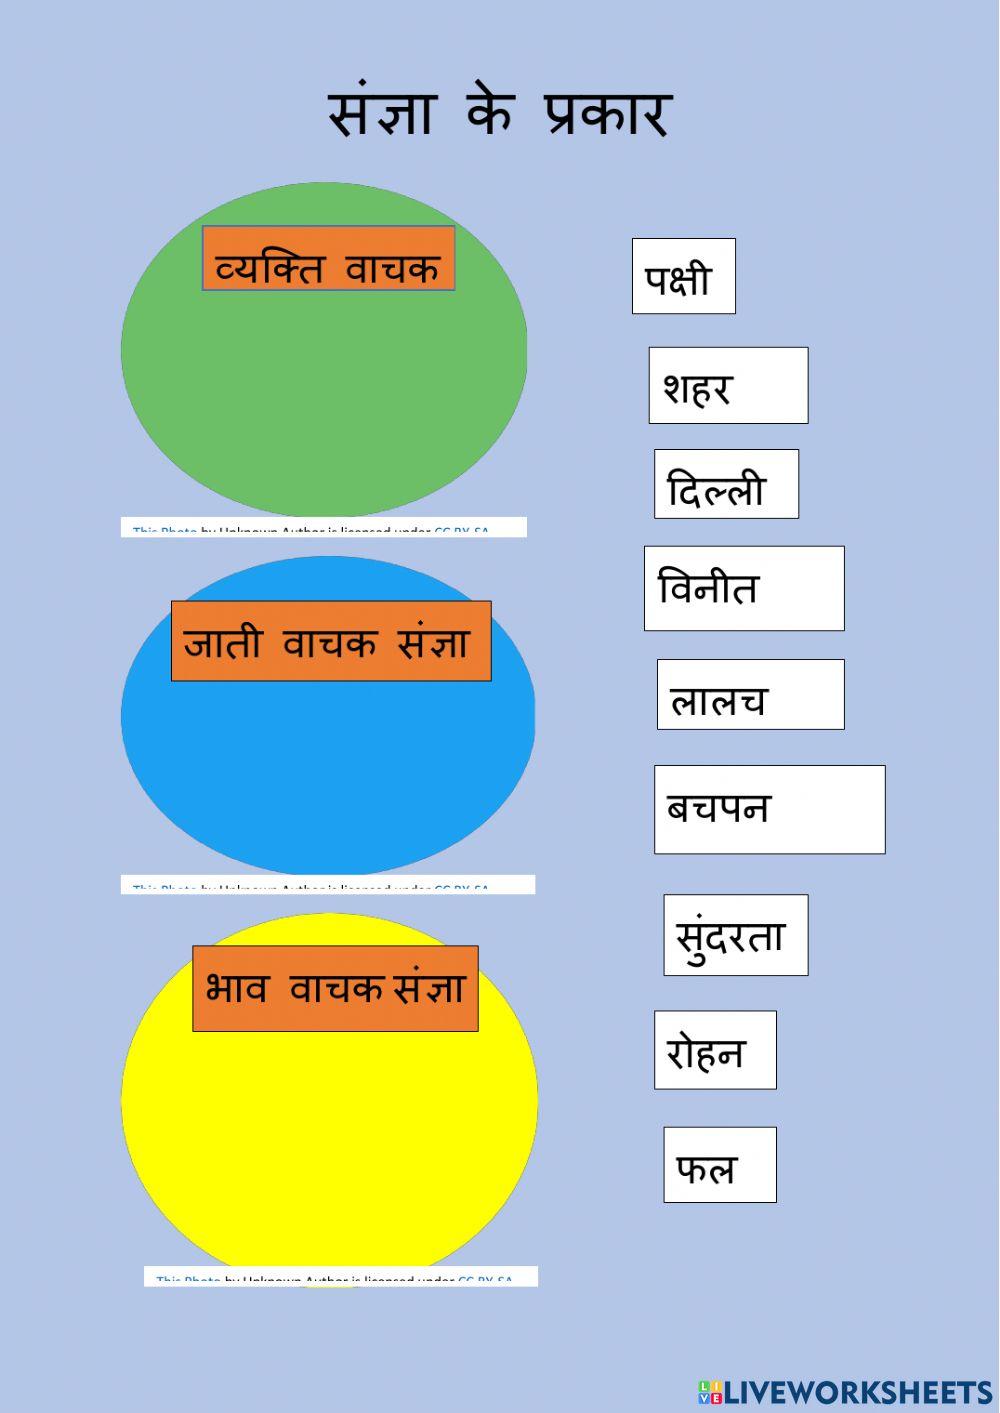 Types of sangya